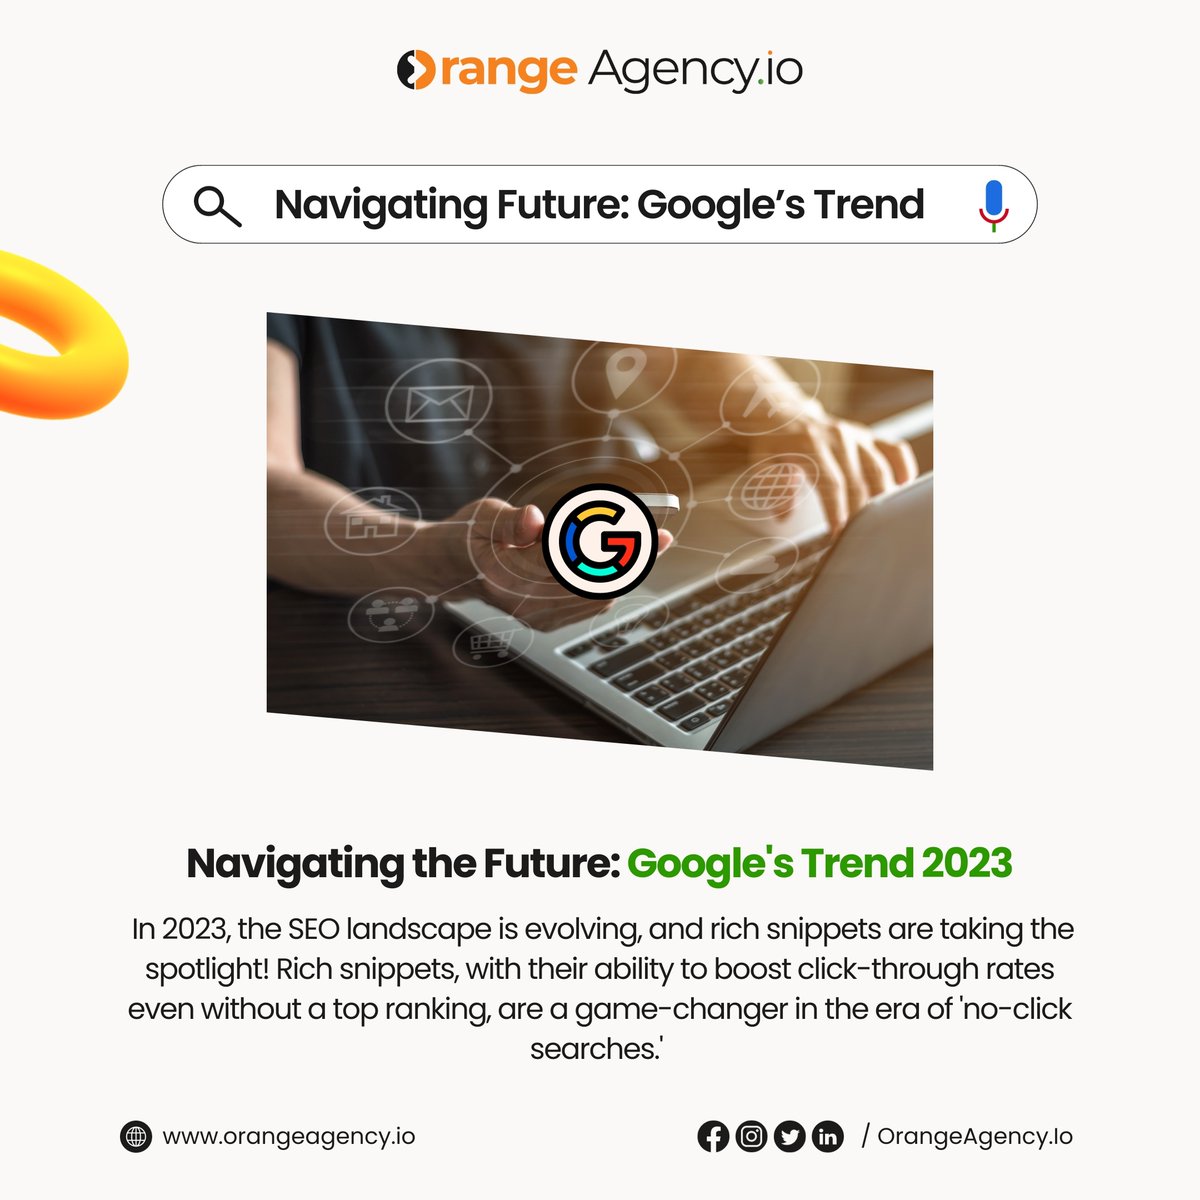 Navigating the Future: Google's Trend 2023.

Stay ahead, stay visible with orangeagency.io

#OrangeAgency #SEO2023 #GoogleTrends #RichSnippets #OrganicClicks #NoClickSearches #SEOStrategy #DigitalMarketing #SearchEngineOptimization #Niger #ElonMusk #Titanic #TheEqualizer3